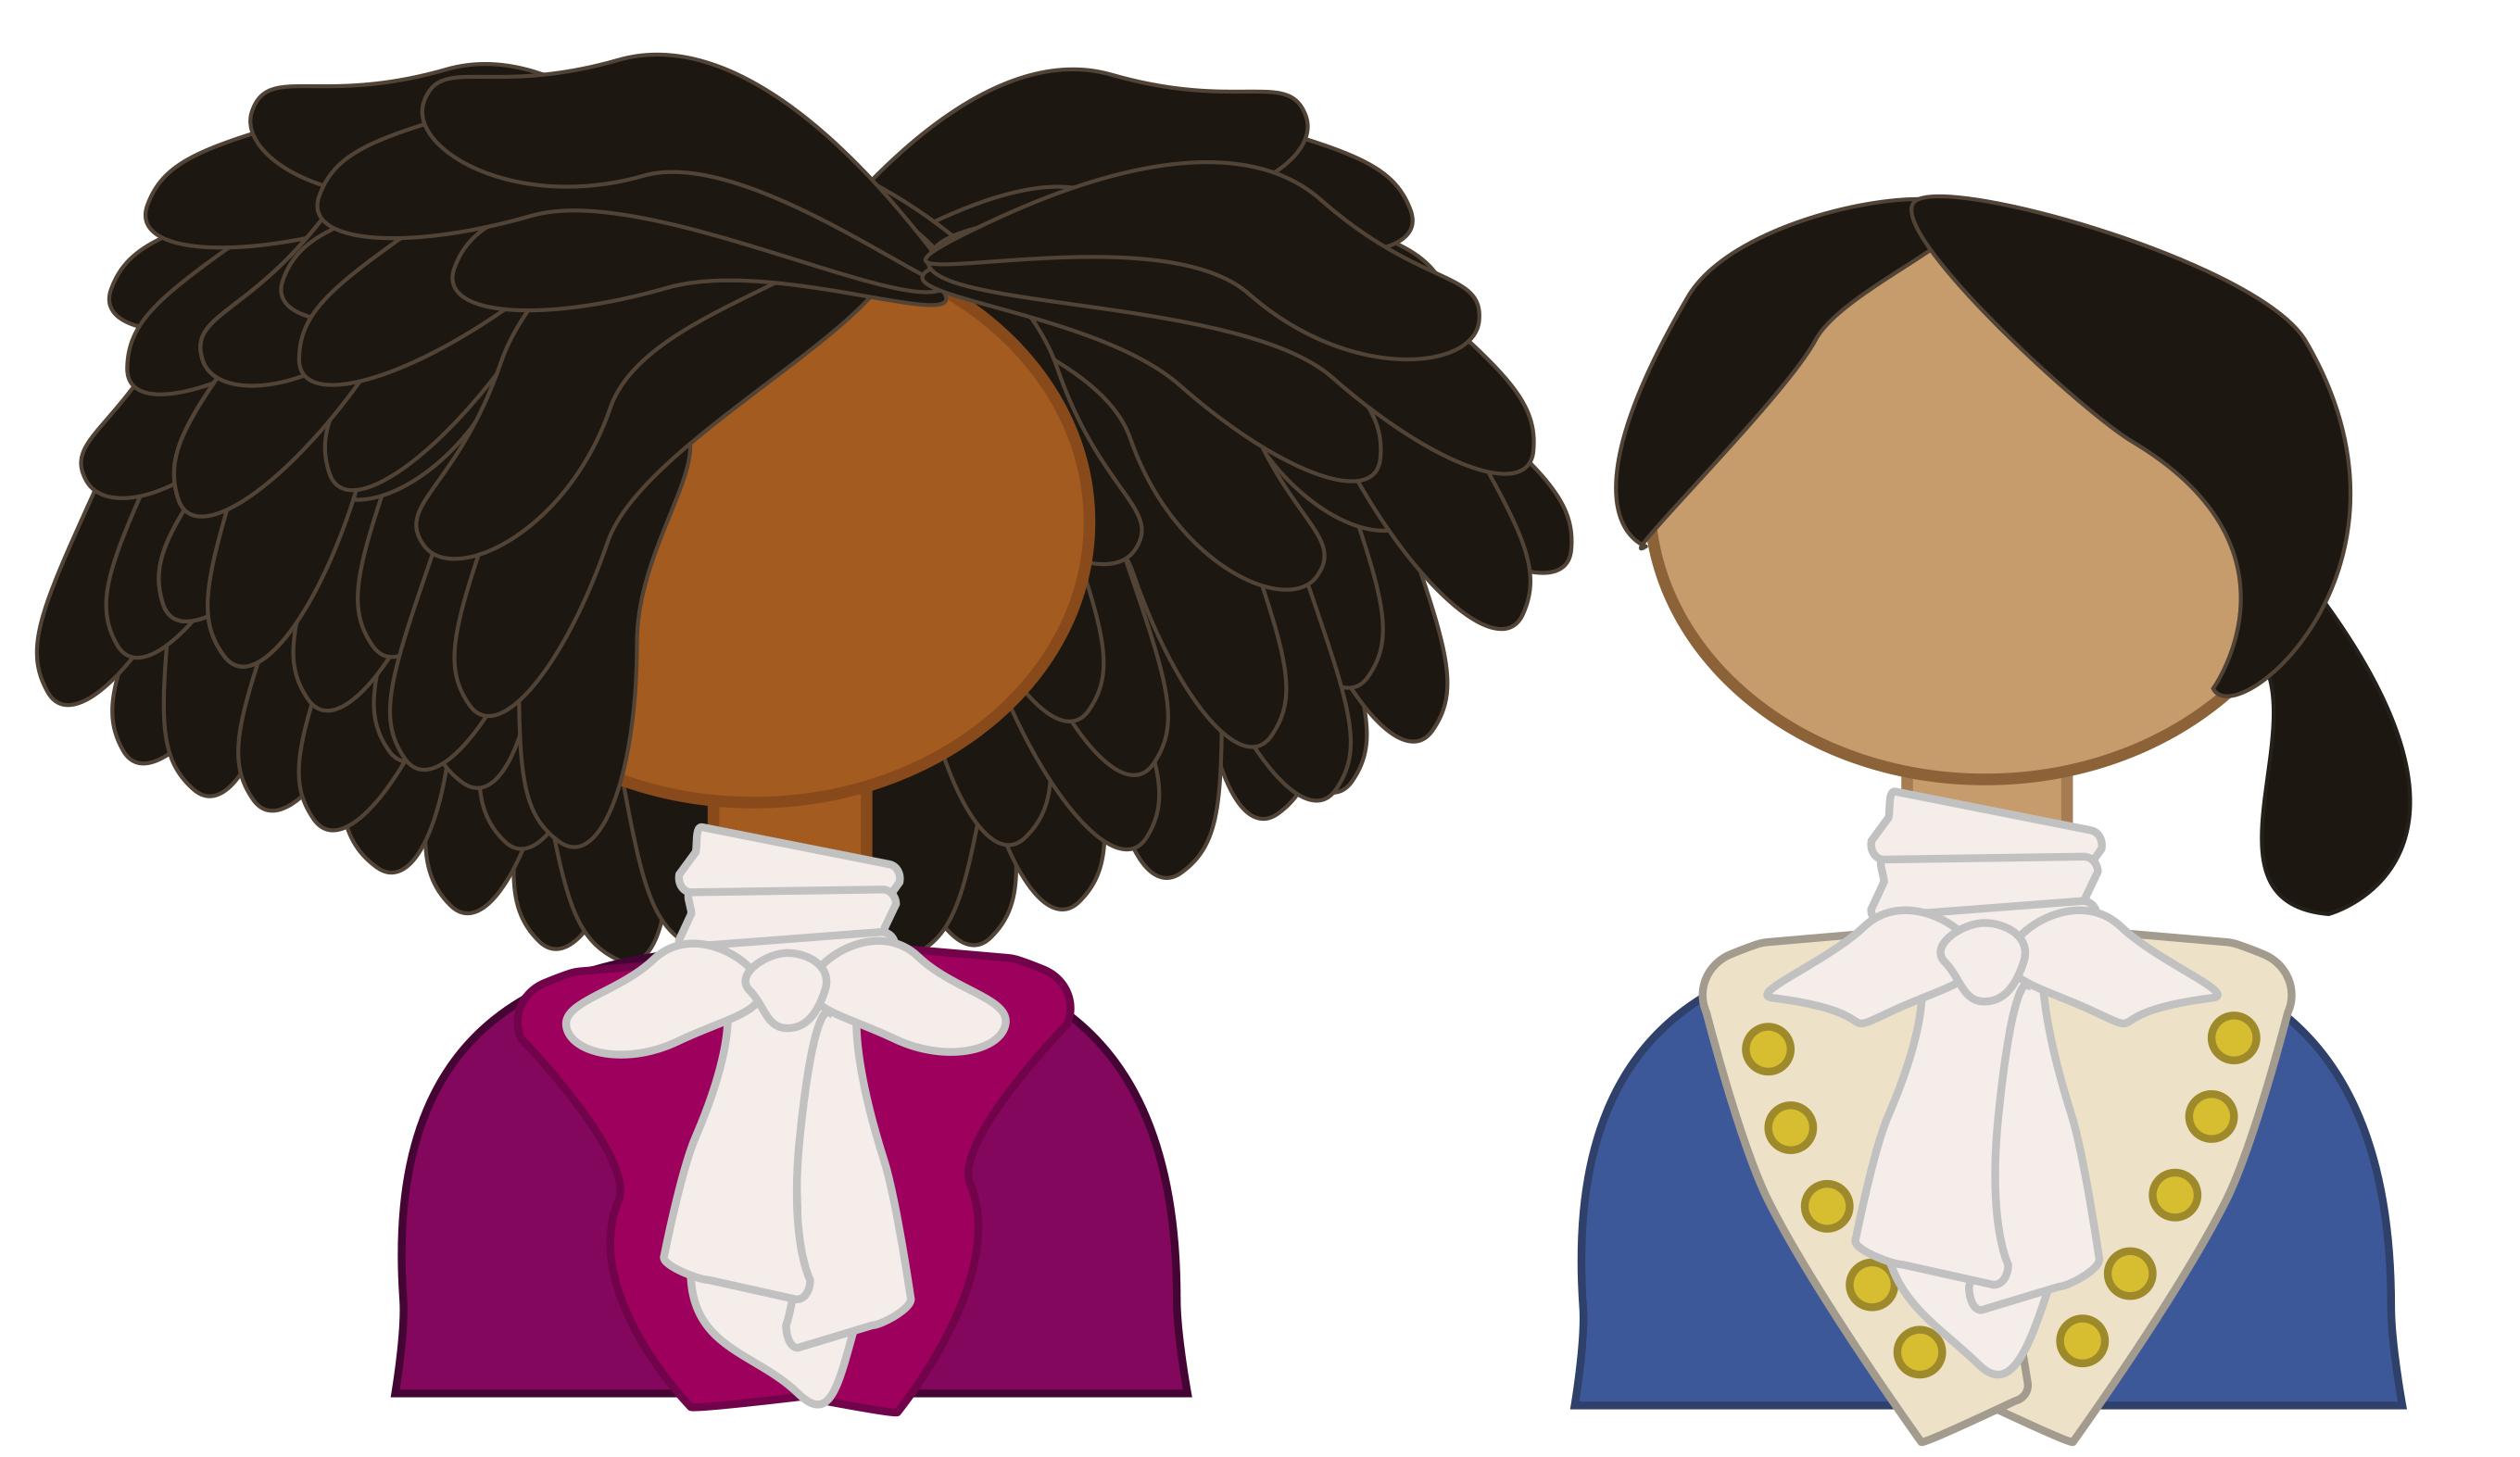 Illustration of Thomas Jefferson and Alexander Hamilton from Hamilton the Musical